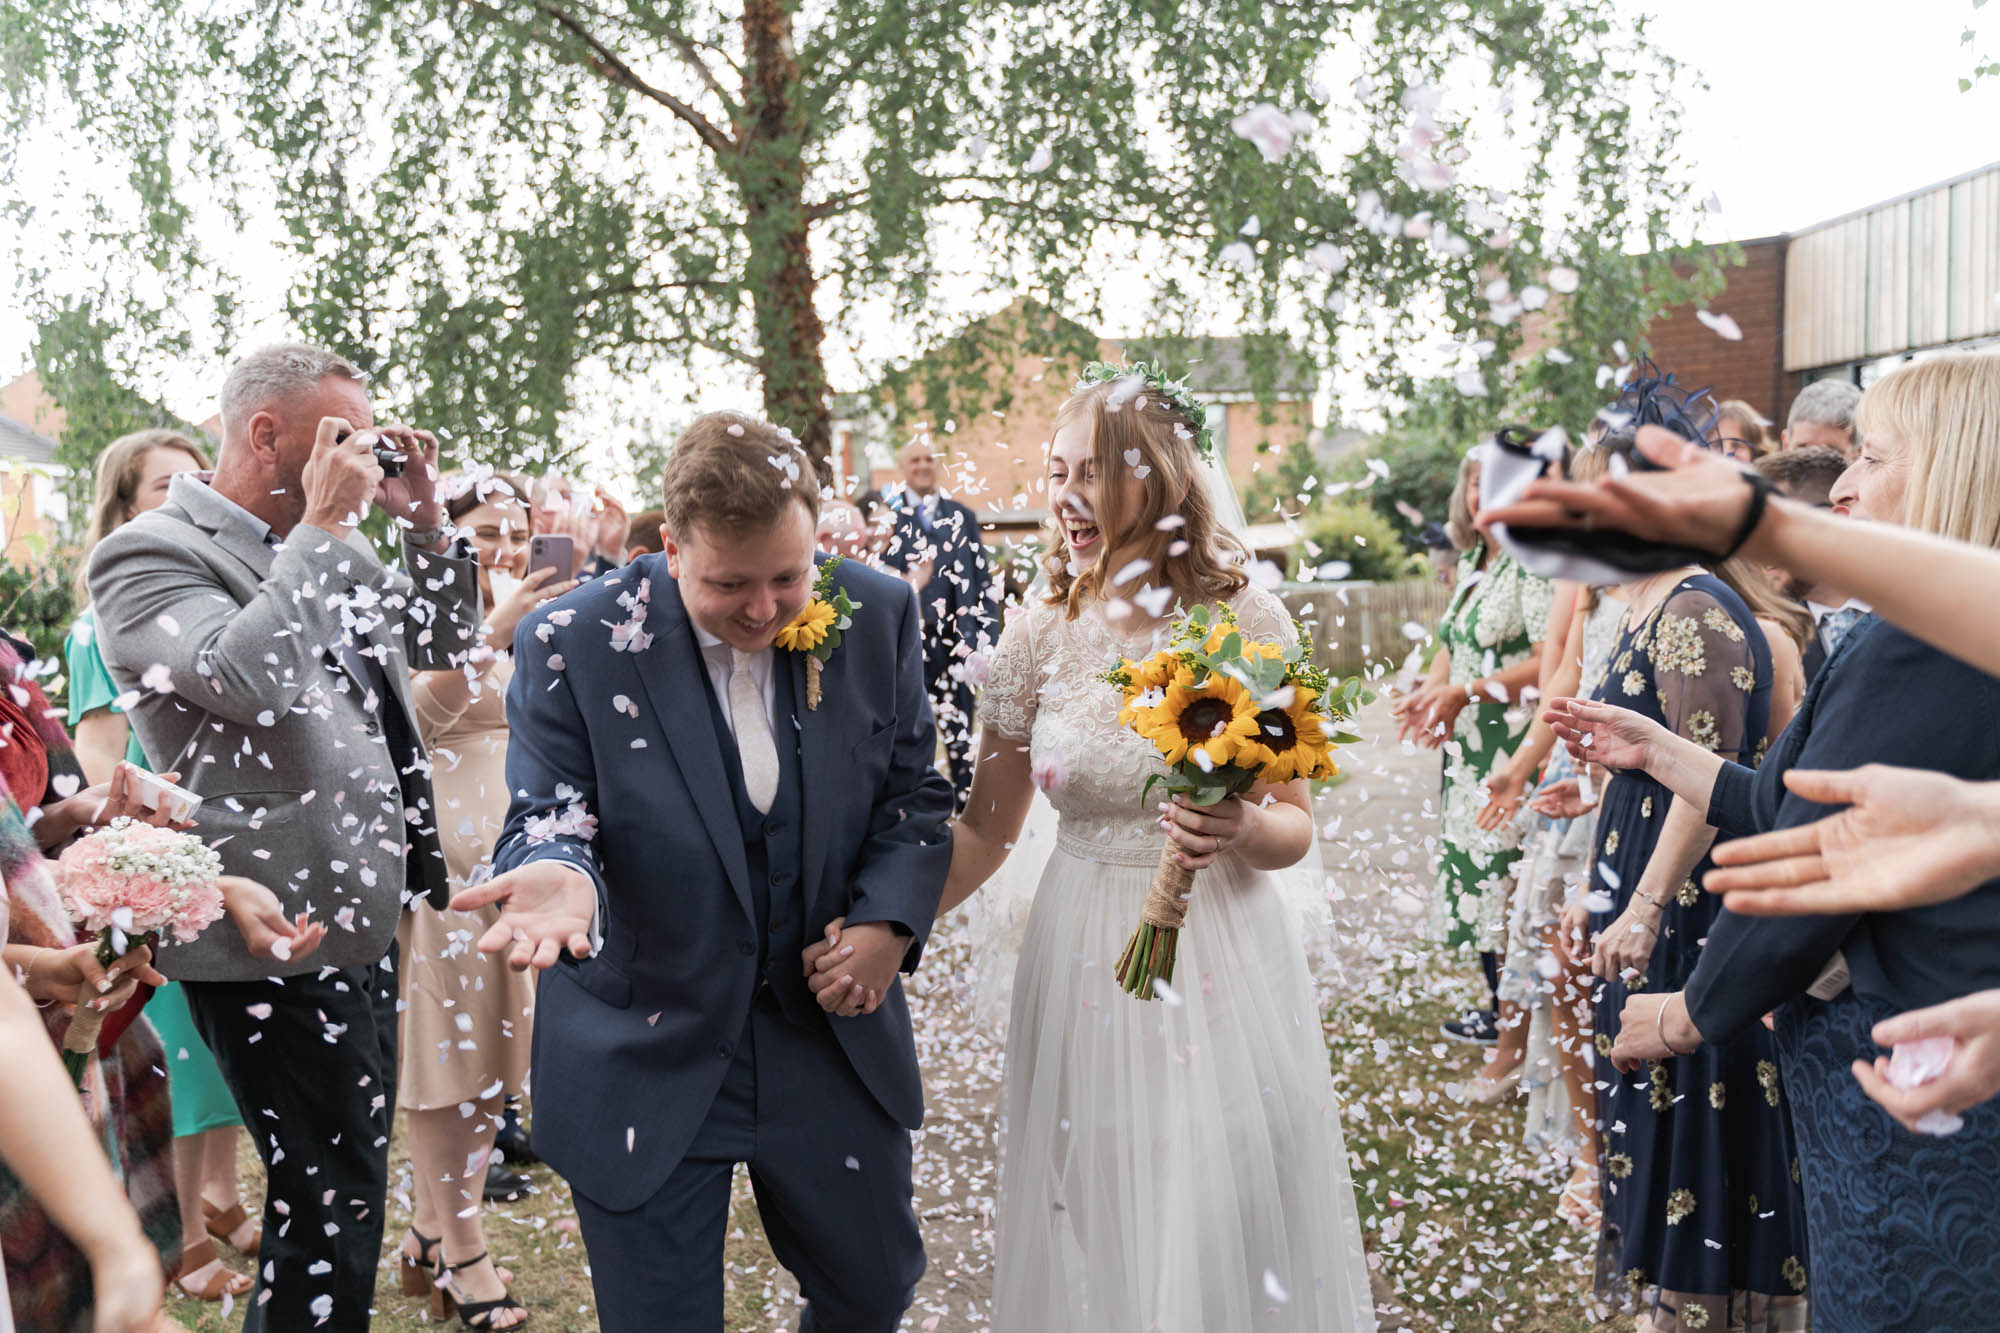 Real Wedding at Dorridge Village Hall by Stephen Williams Photography